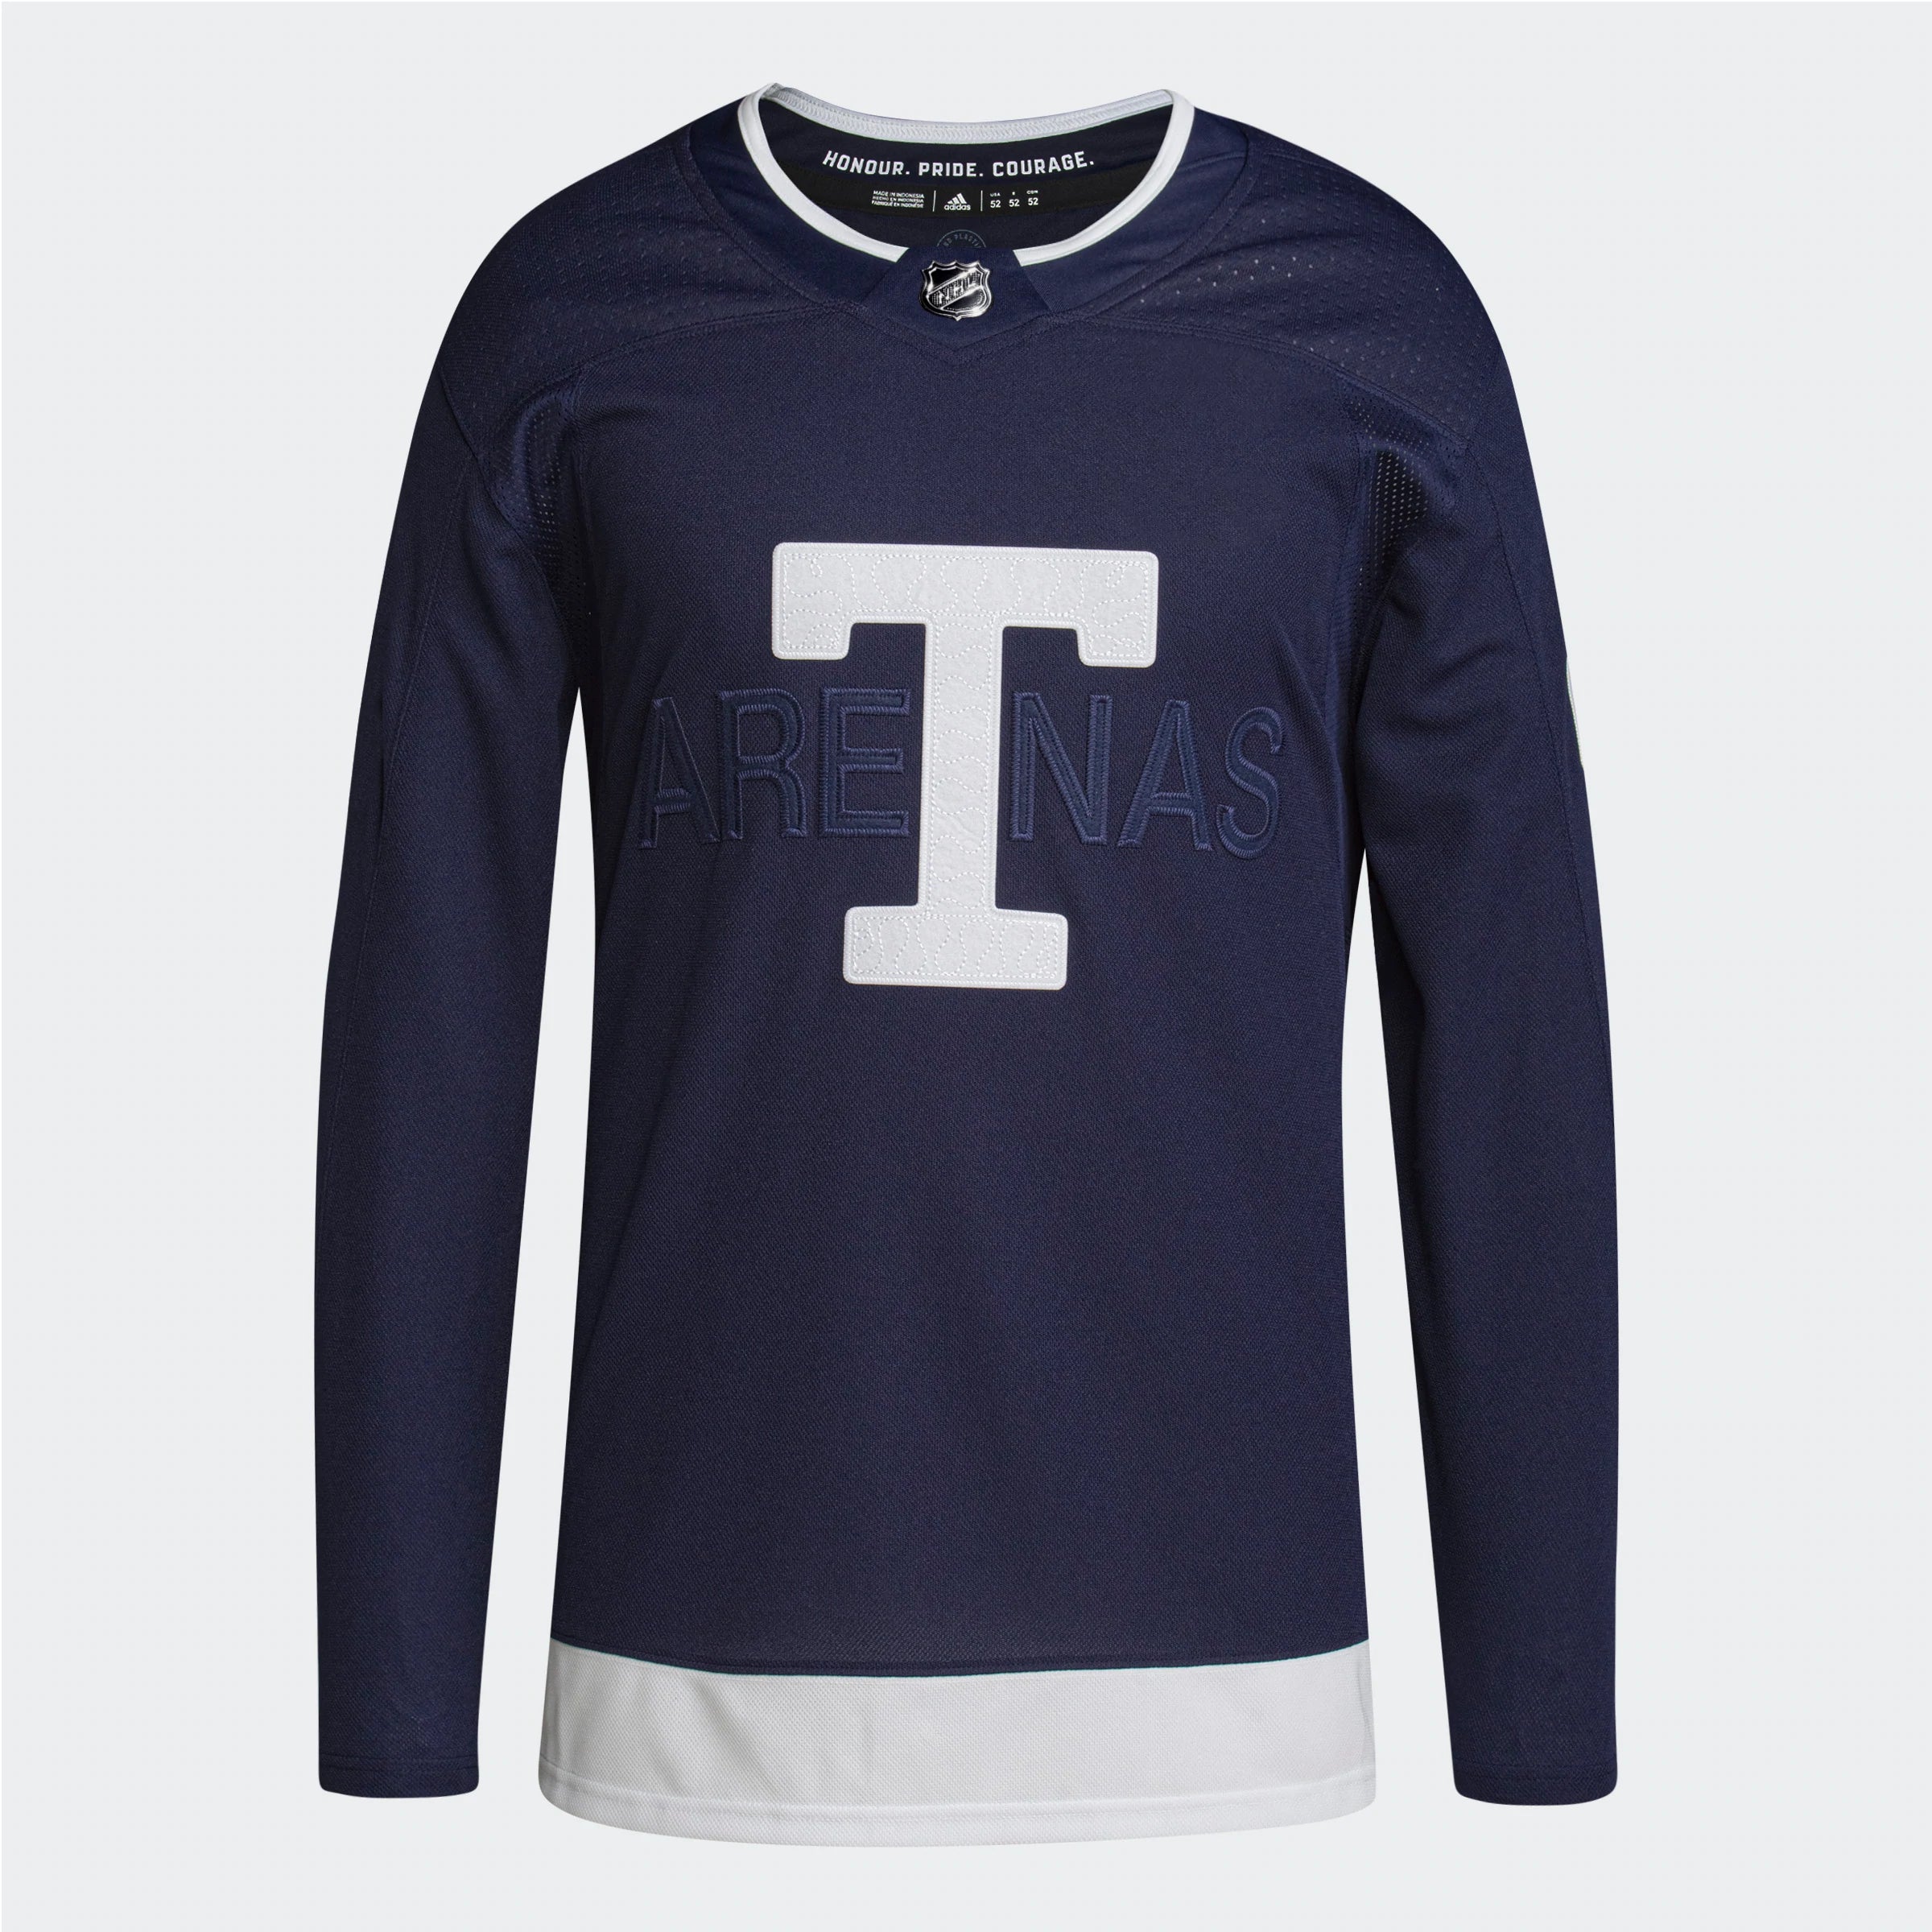 Authentic Adidas Toronto Maple Leafs Heritage Jersey - Leaside Hockey Shop Inc.